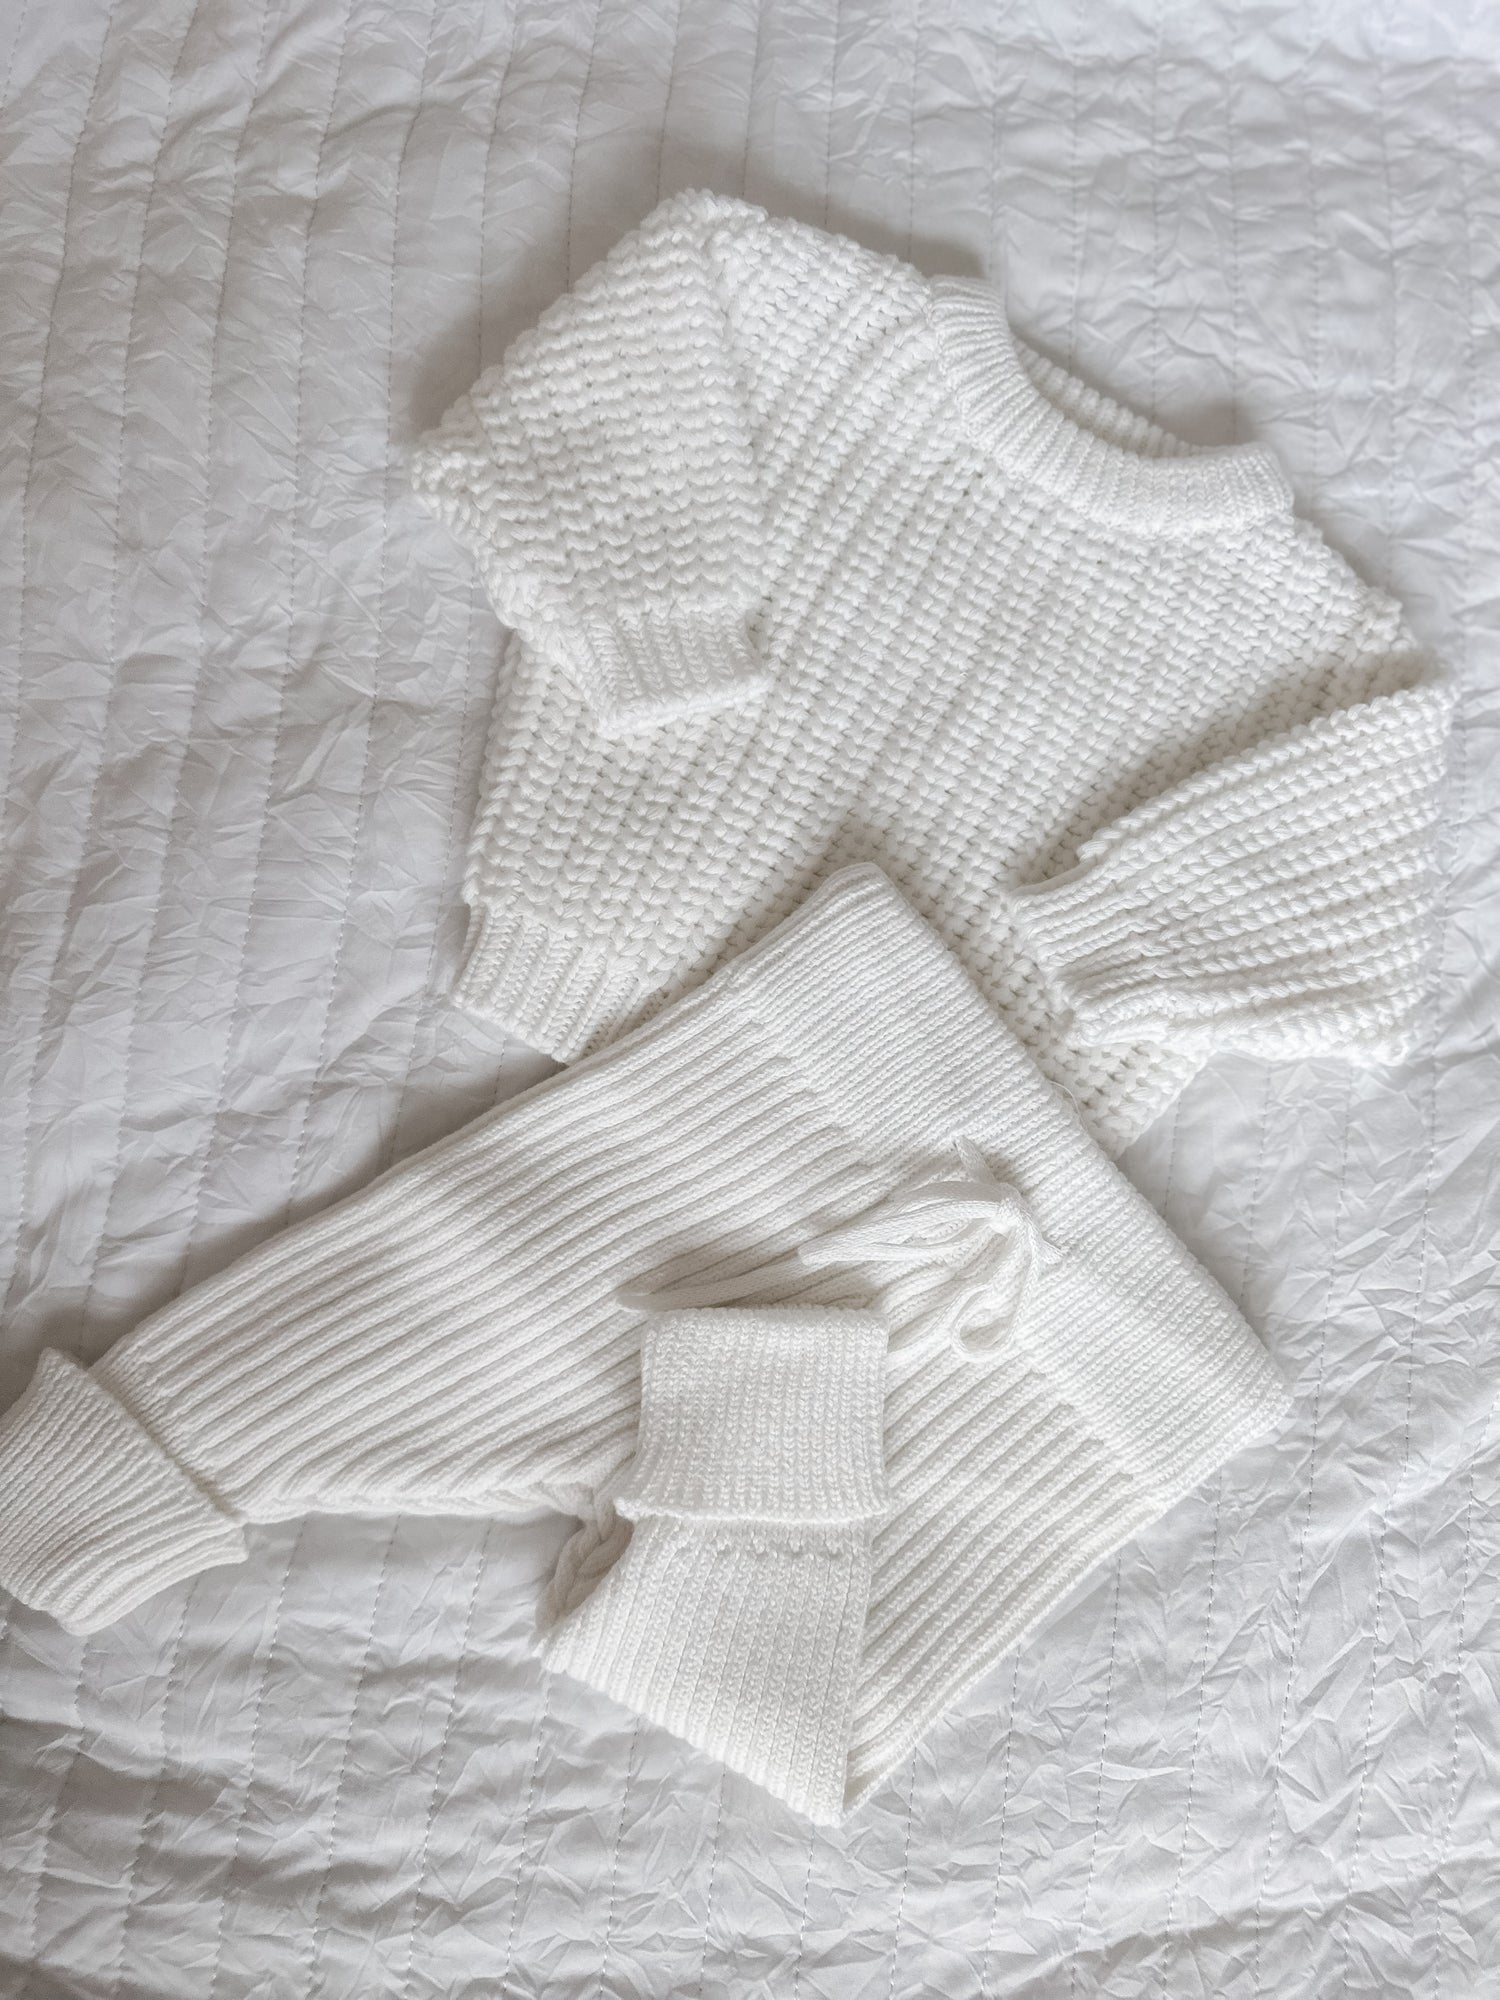 White knitted jumper